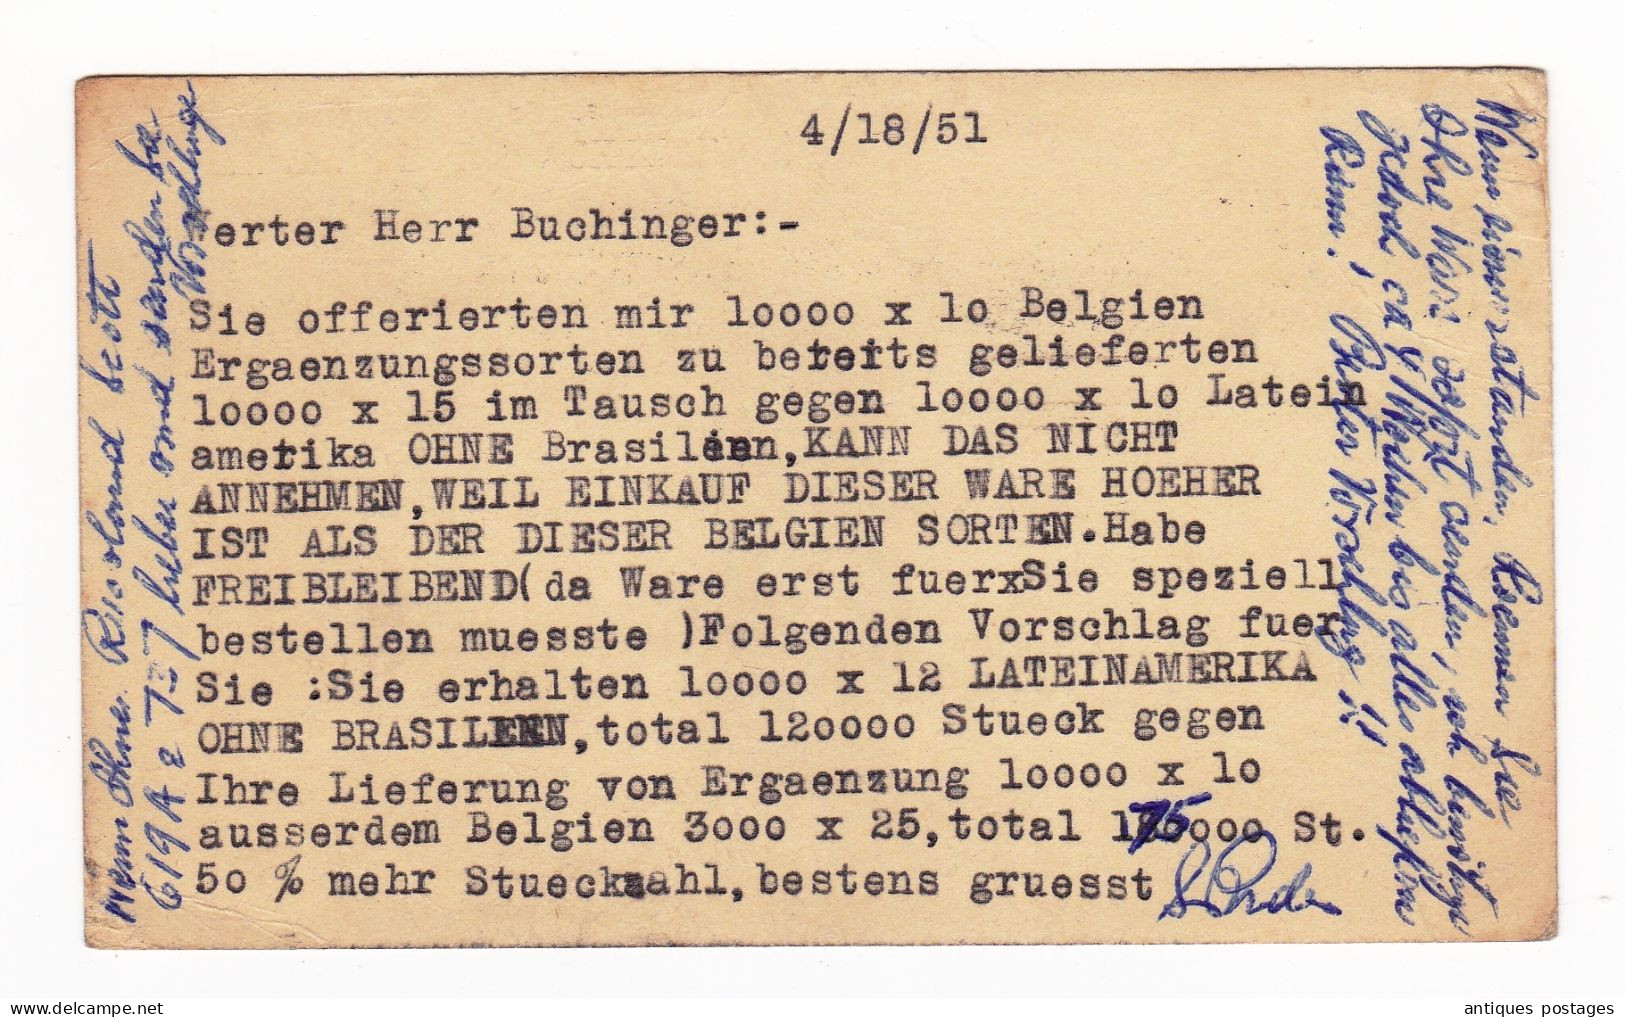 Post Card 1951 USA New York S. Pordes Bruxelles Belgique Buchinger